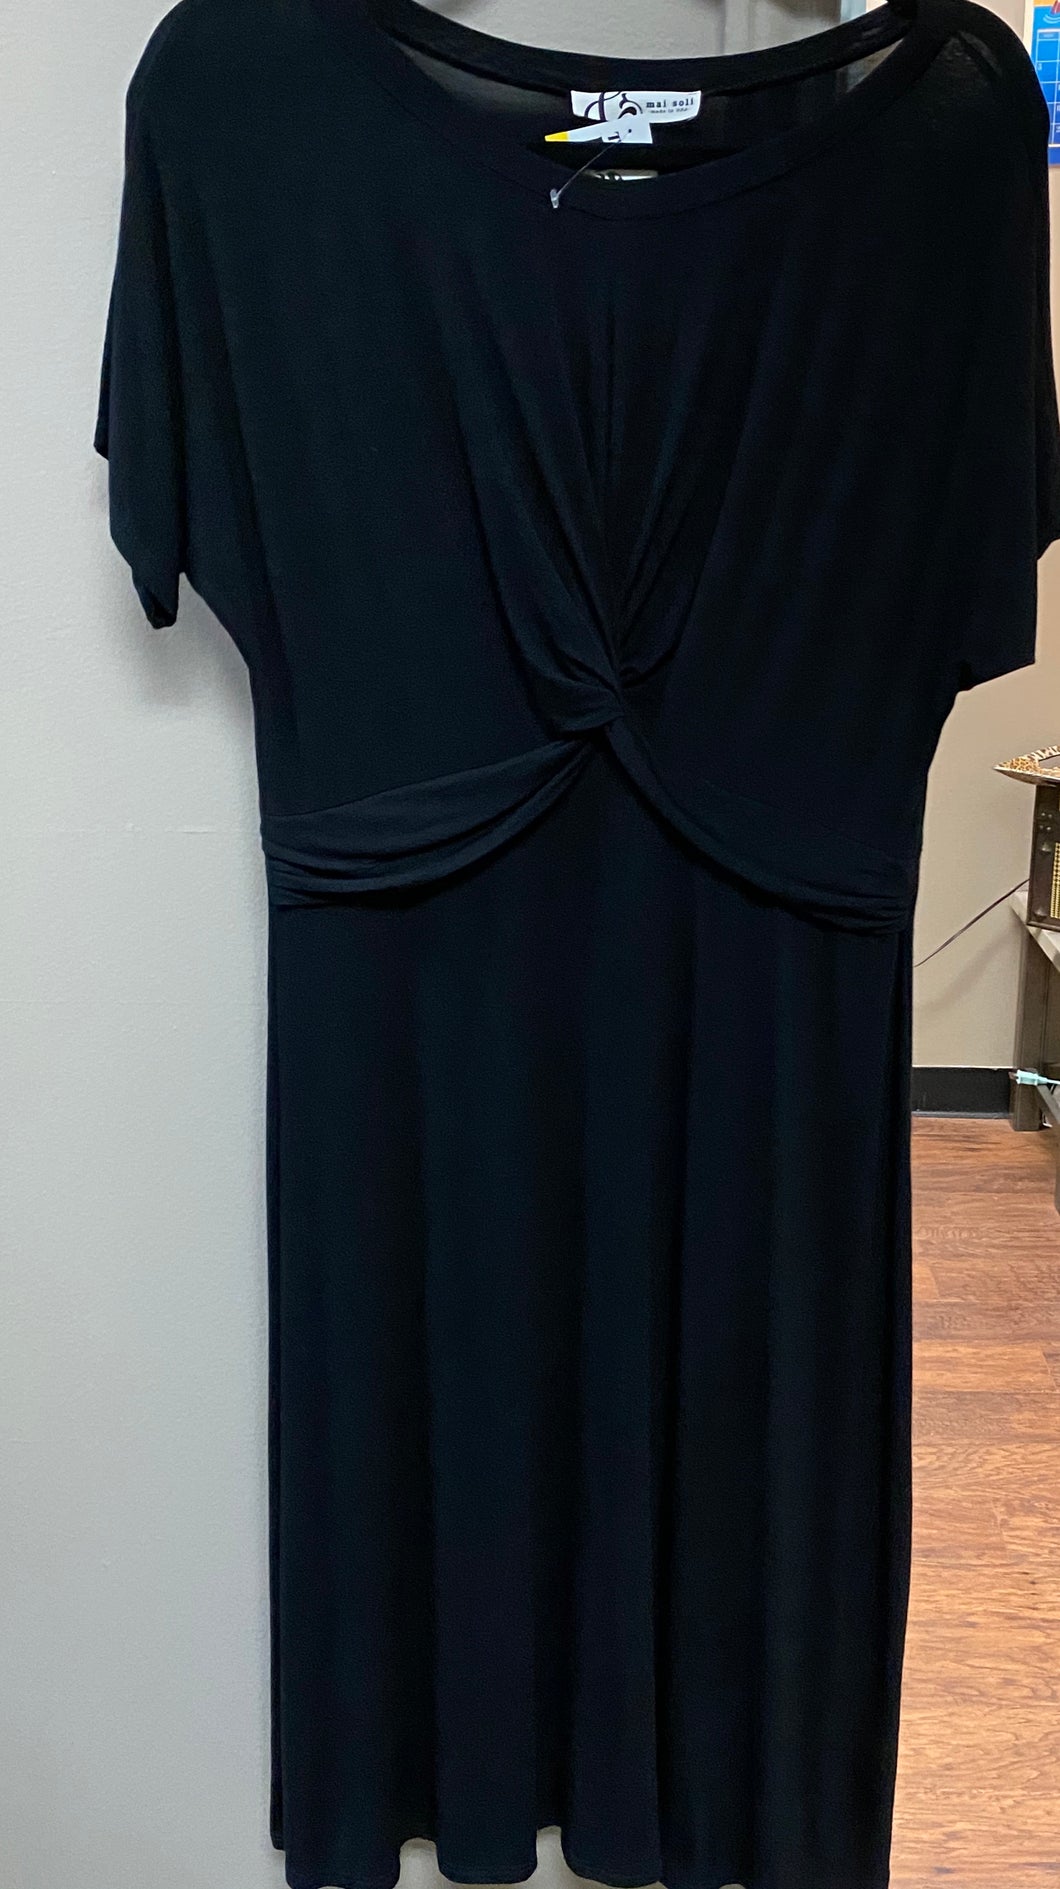 Black short sleeve knotted dress